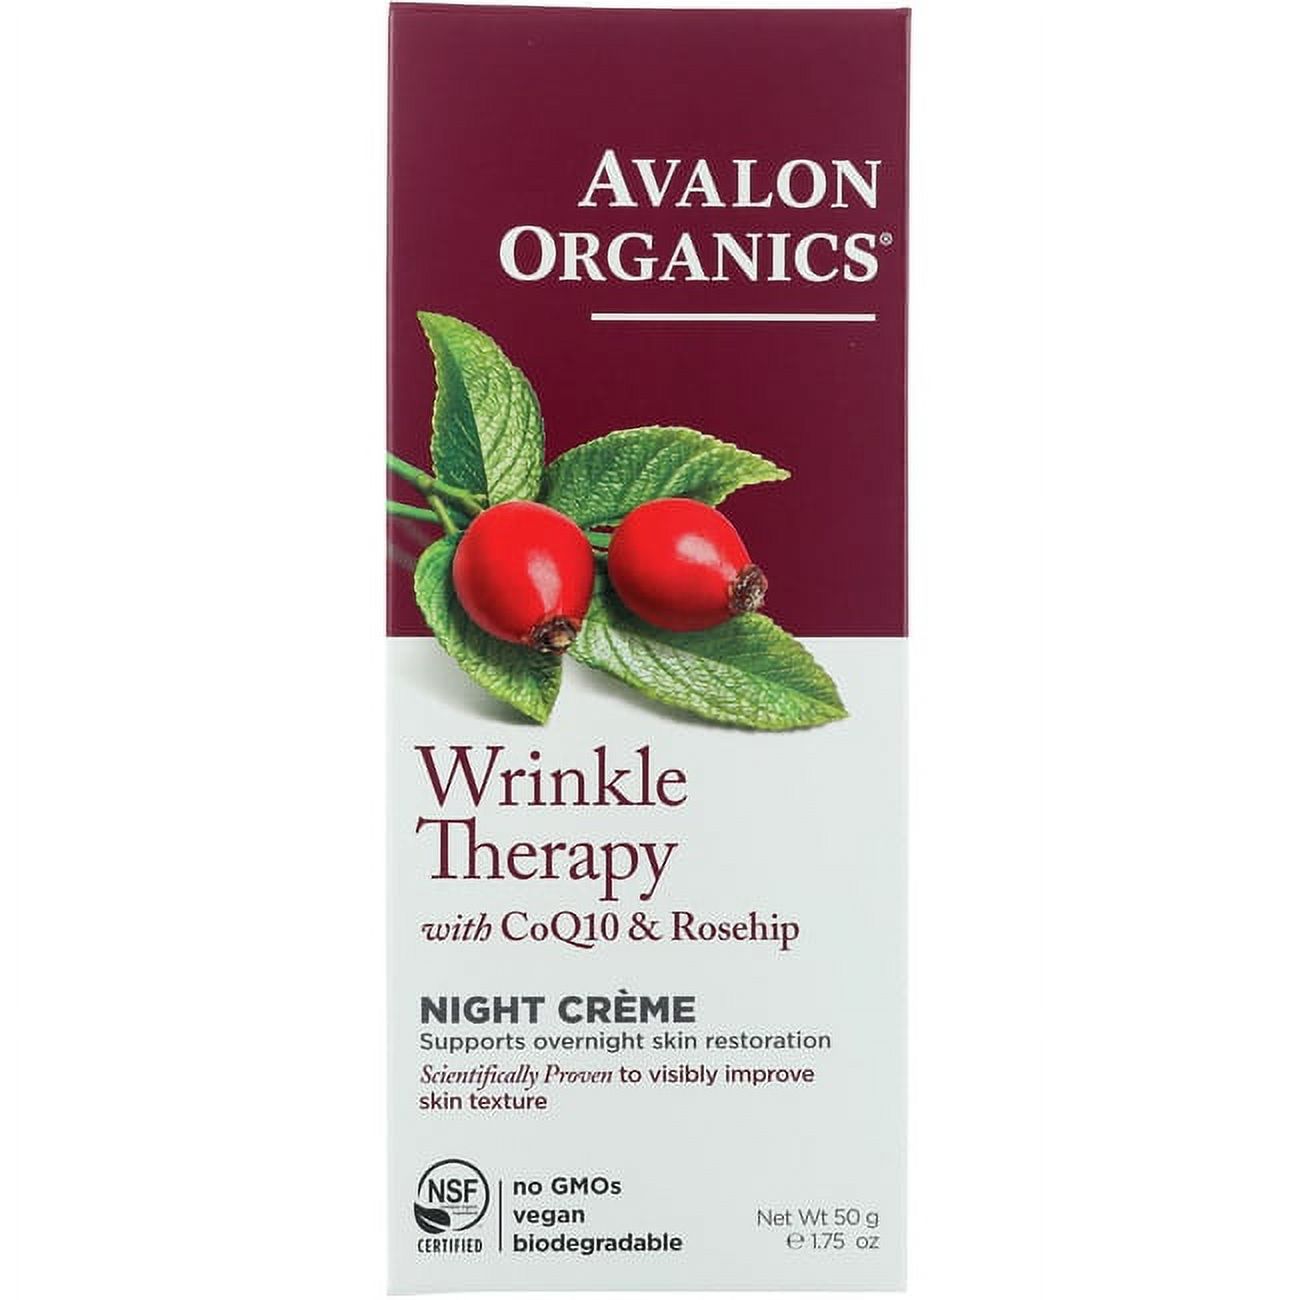 Avalon Organics Wrinkle Therapy with Coq10 & Rosehip - Night Creme 1.75 oz Cream - image 1 of 2